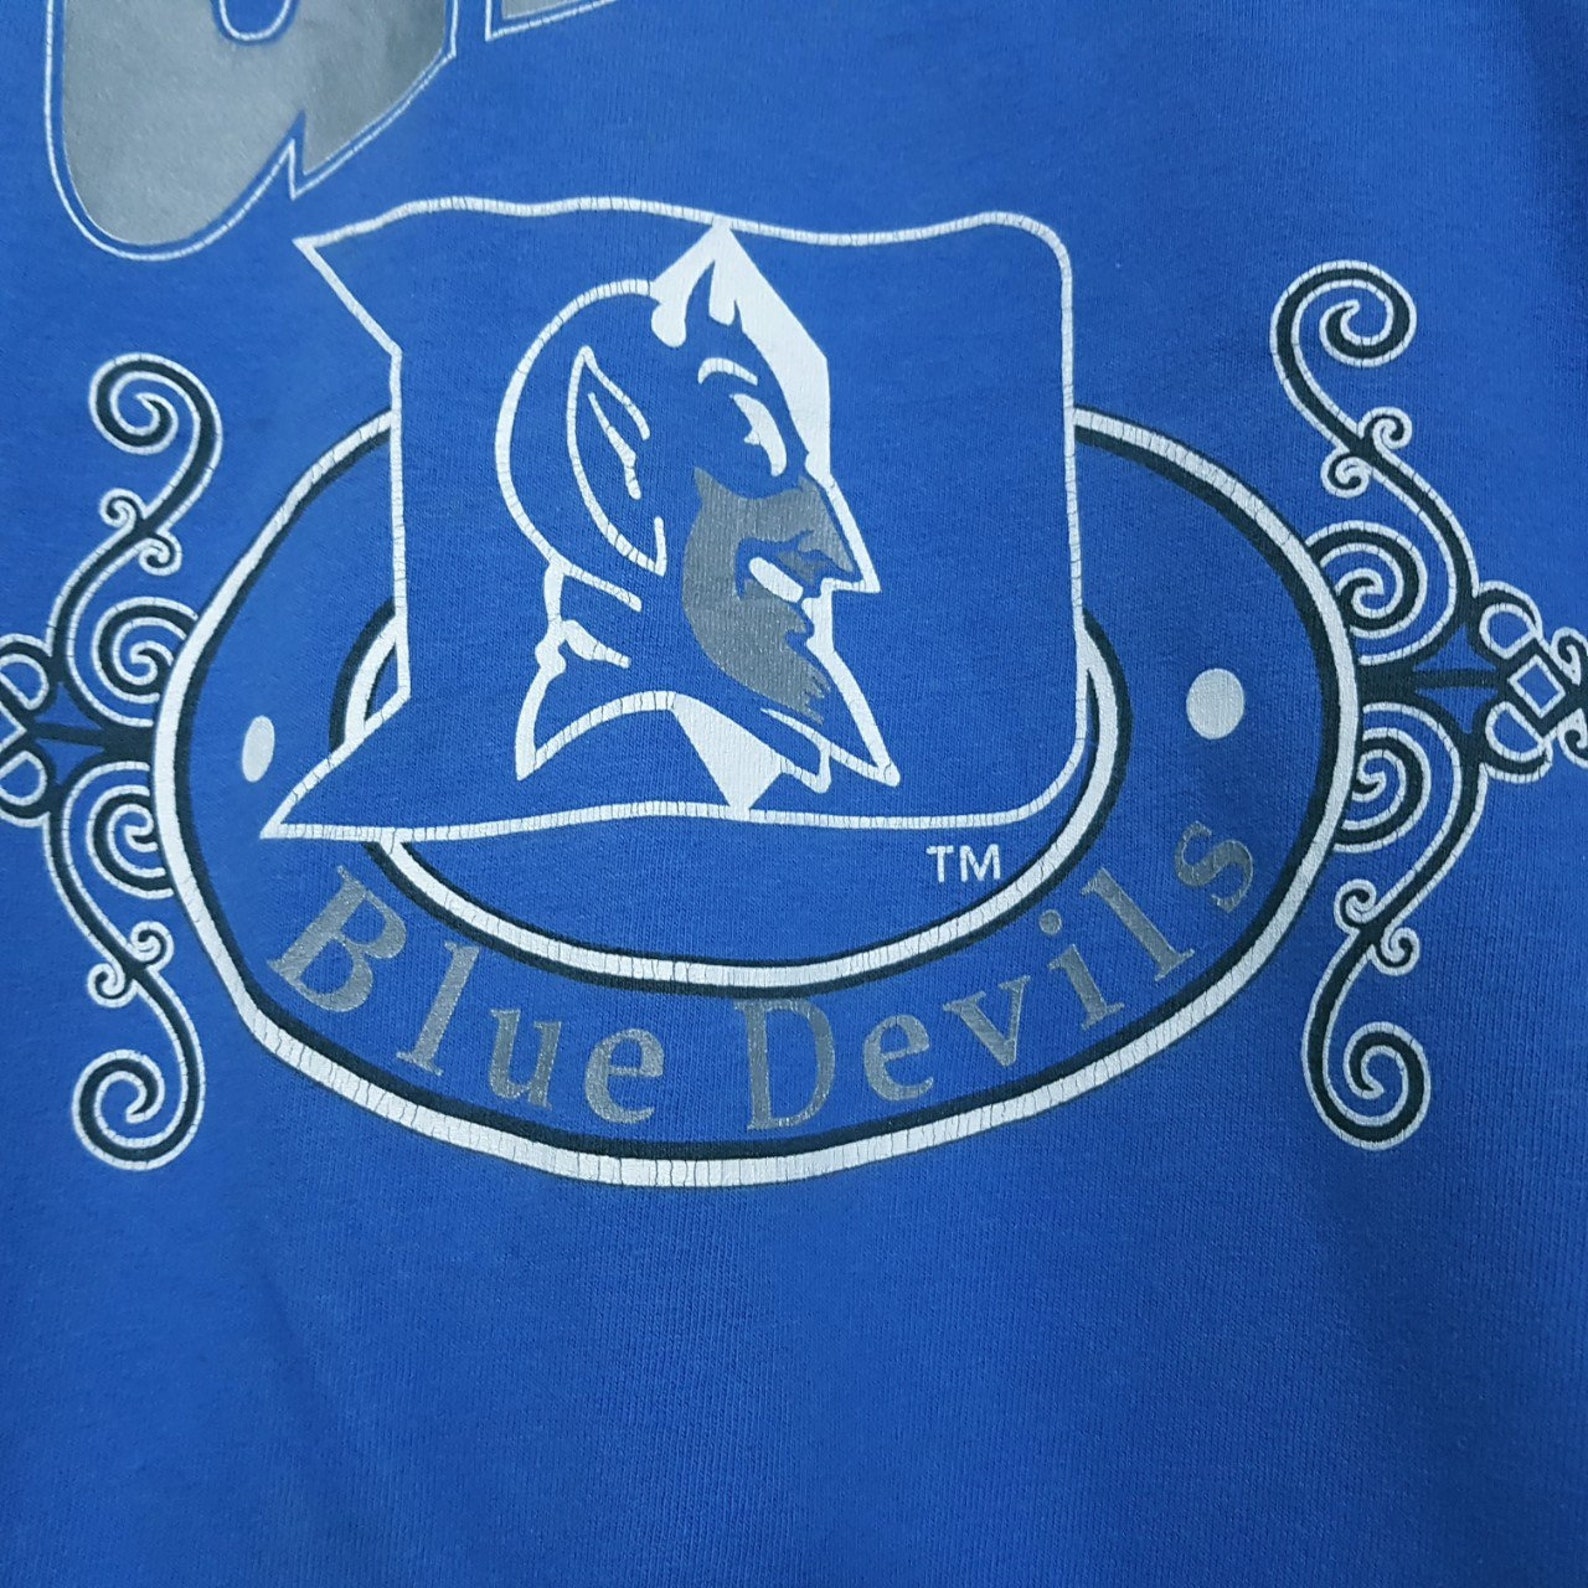 Vintage Duke University T Shirt Taille Xl Etsy